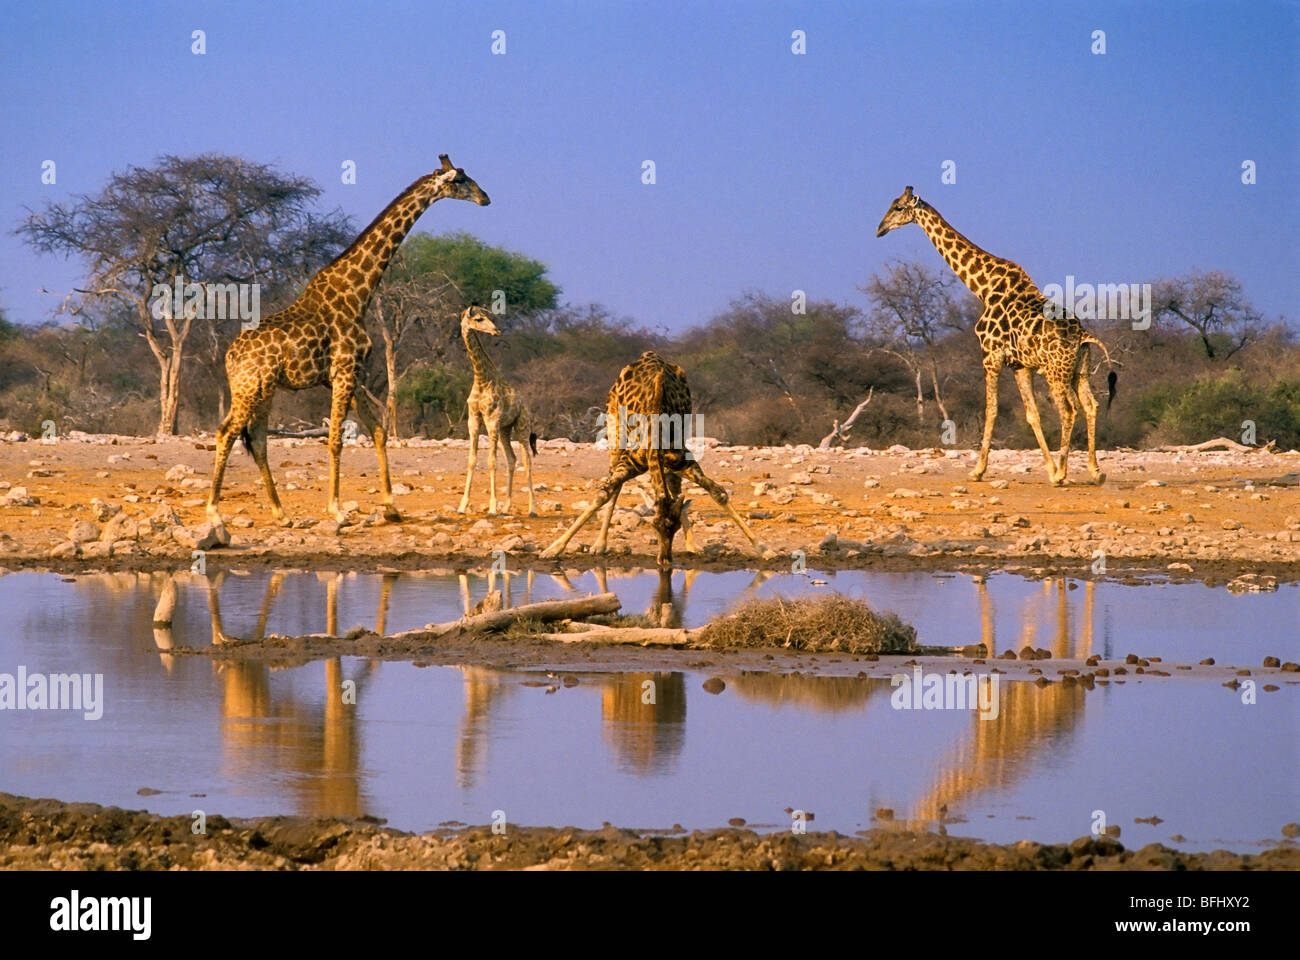 Giraffes (Giraffa camelopardalis) at watering hole, Etosha National Park, Namibia, Africa Stock Photo